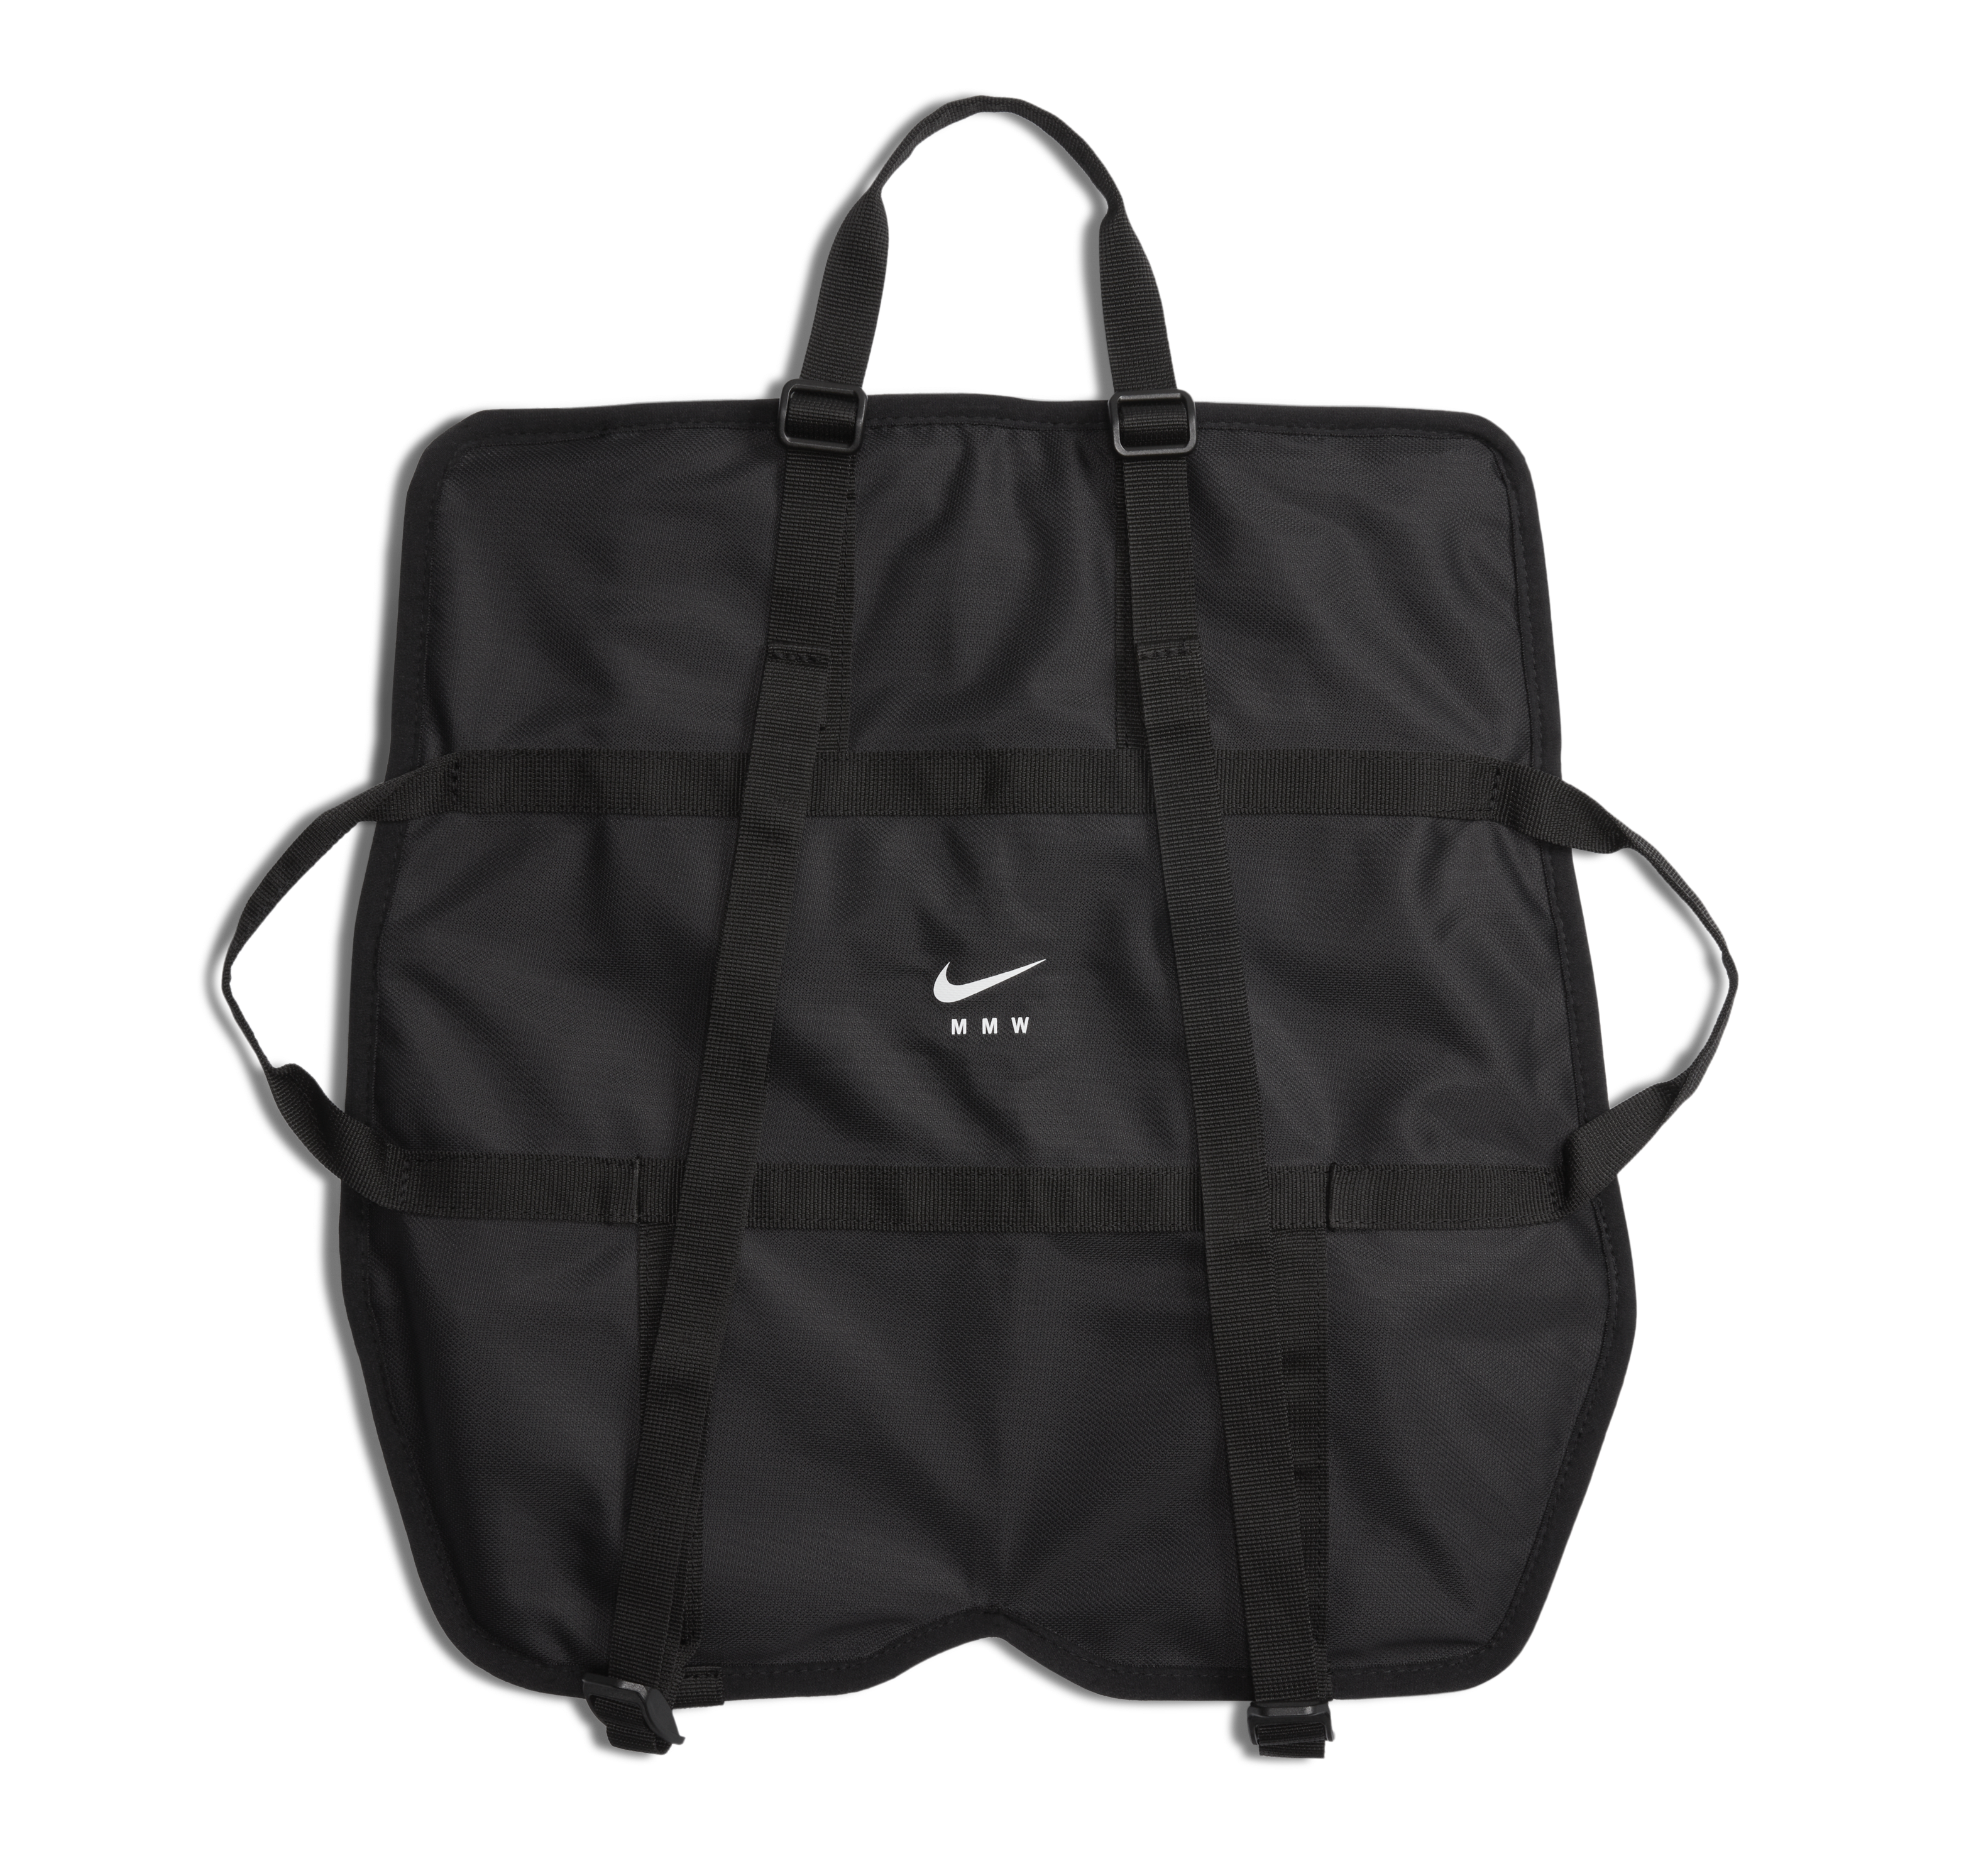 Matthew M. Williams x Nike MMW5 Slide Bag